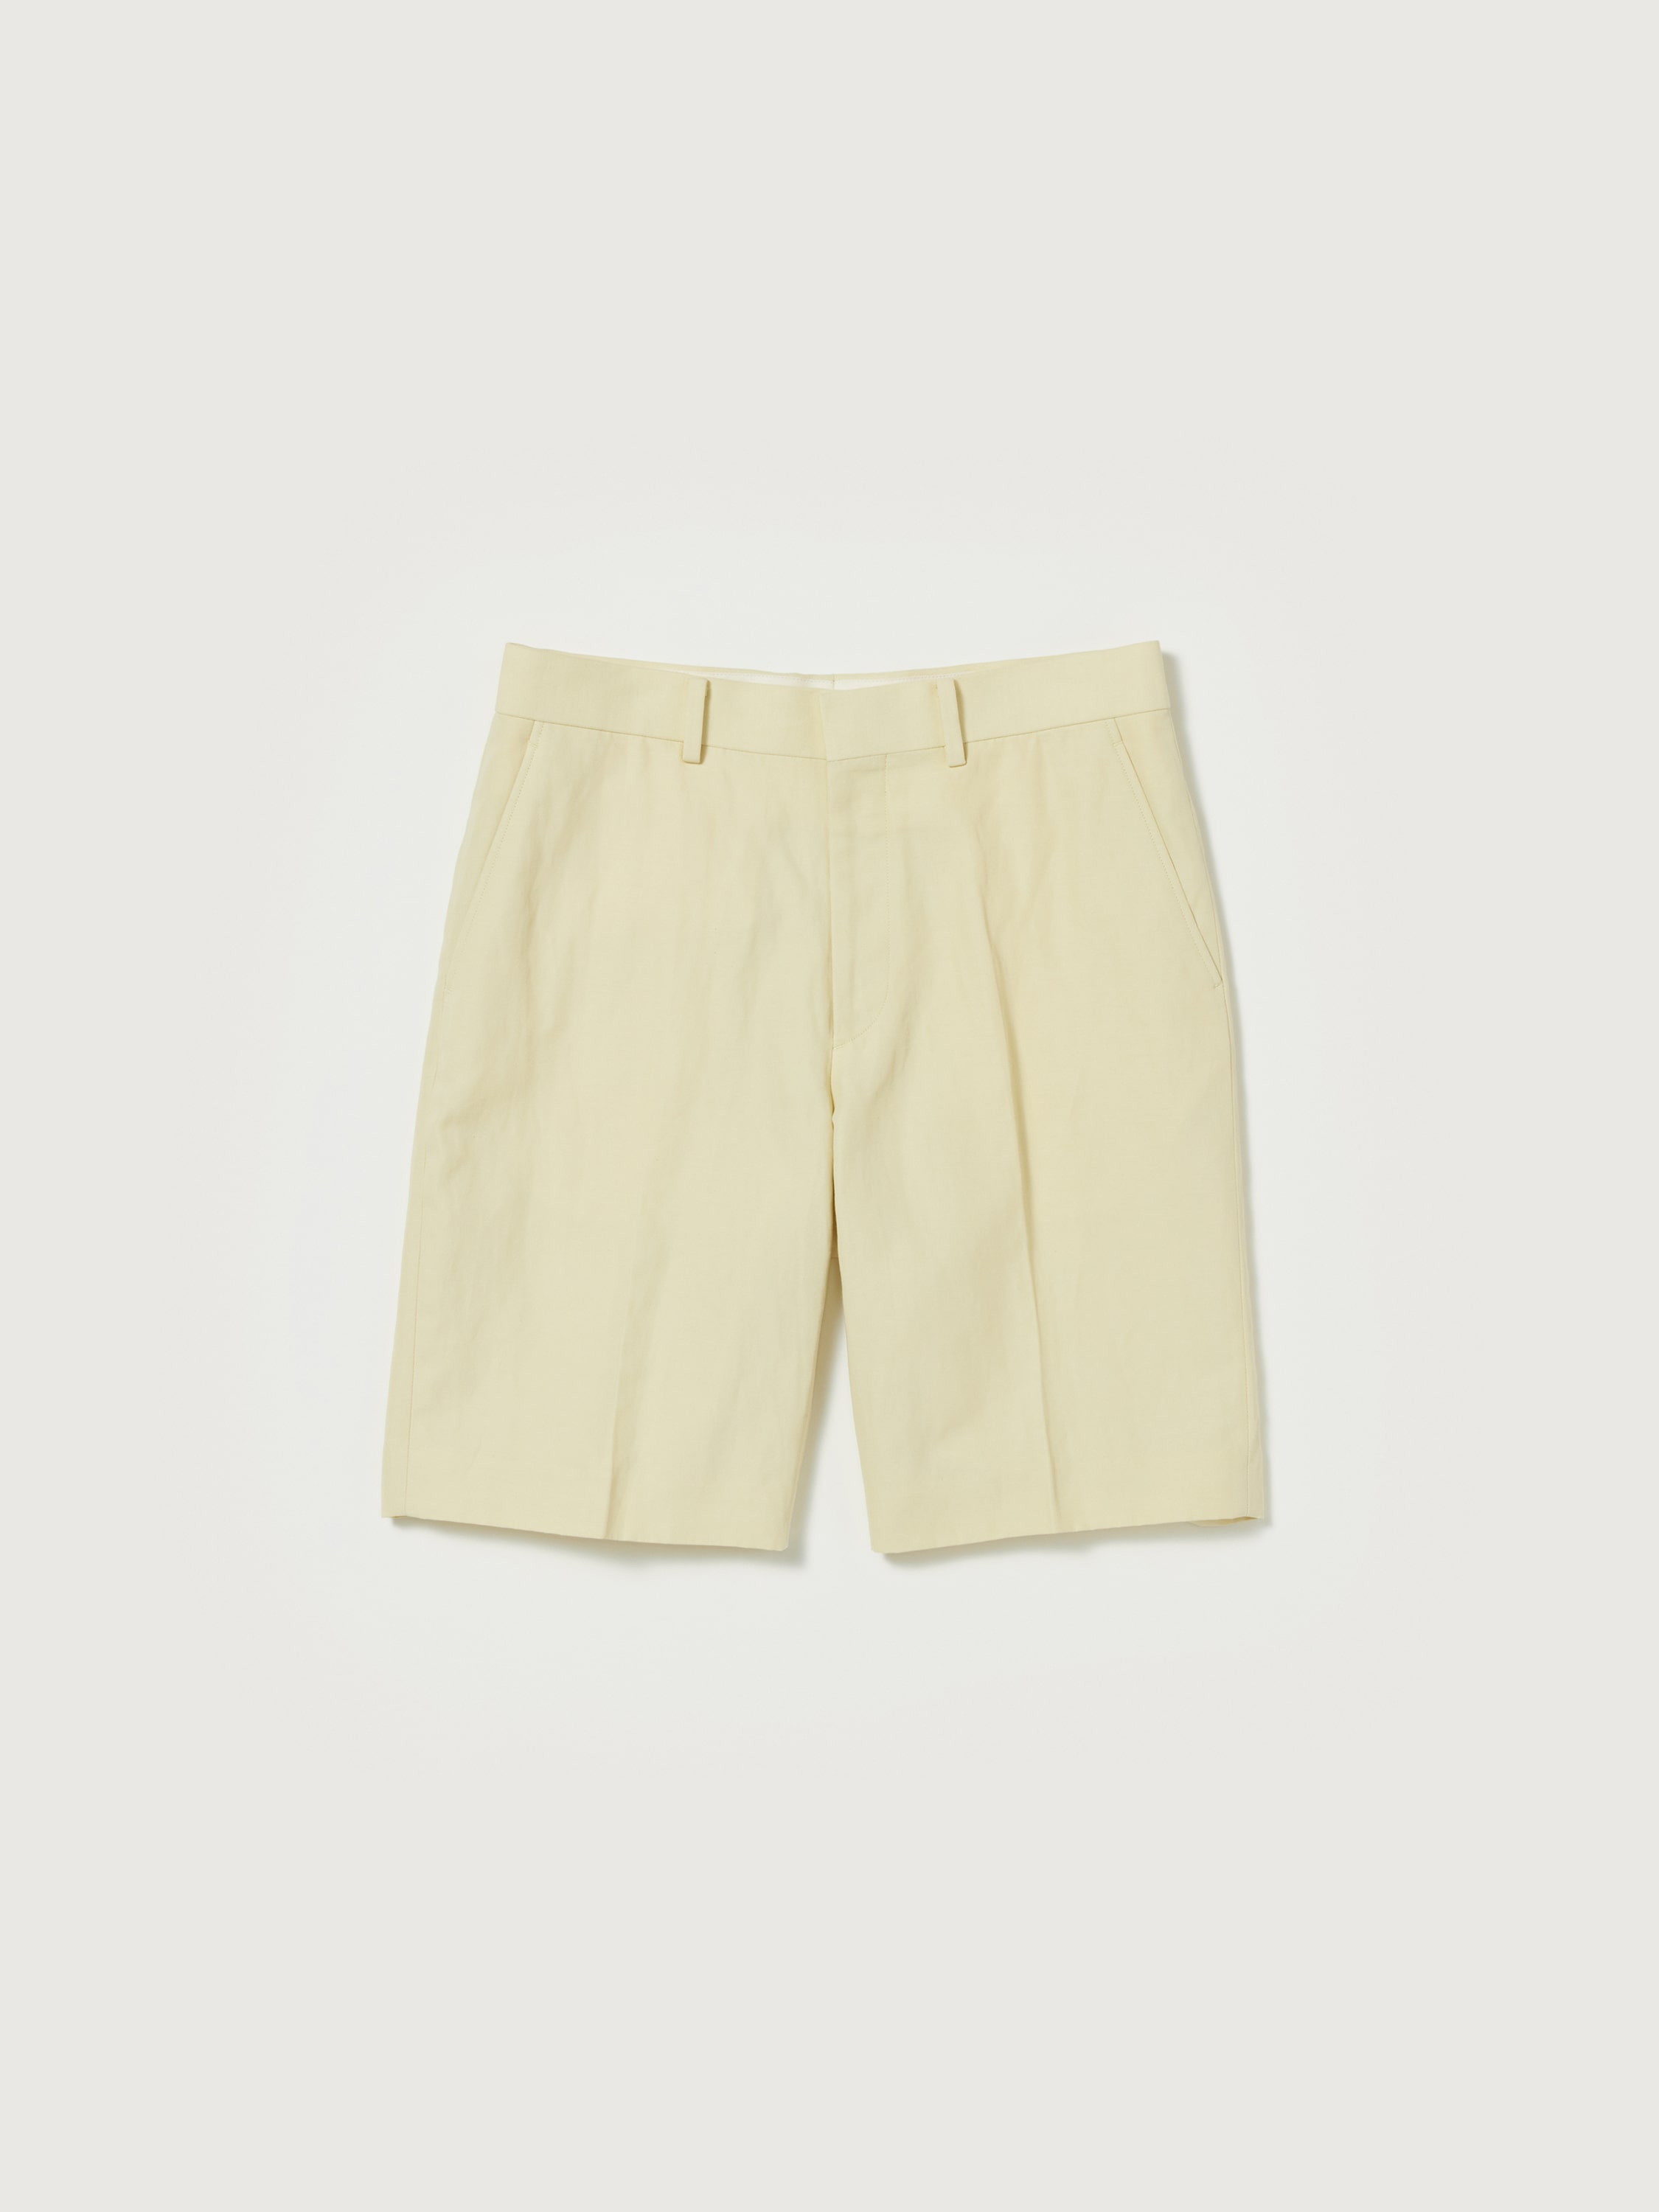 short fin Men's Linen Cargo Shorts (Natural, Size 30 L8002)